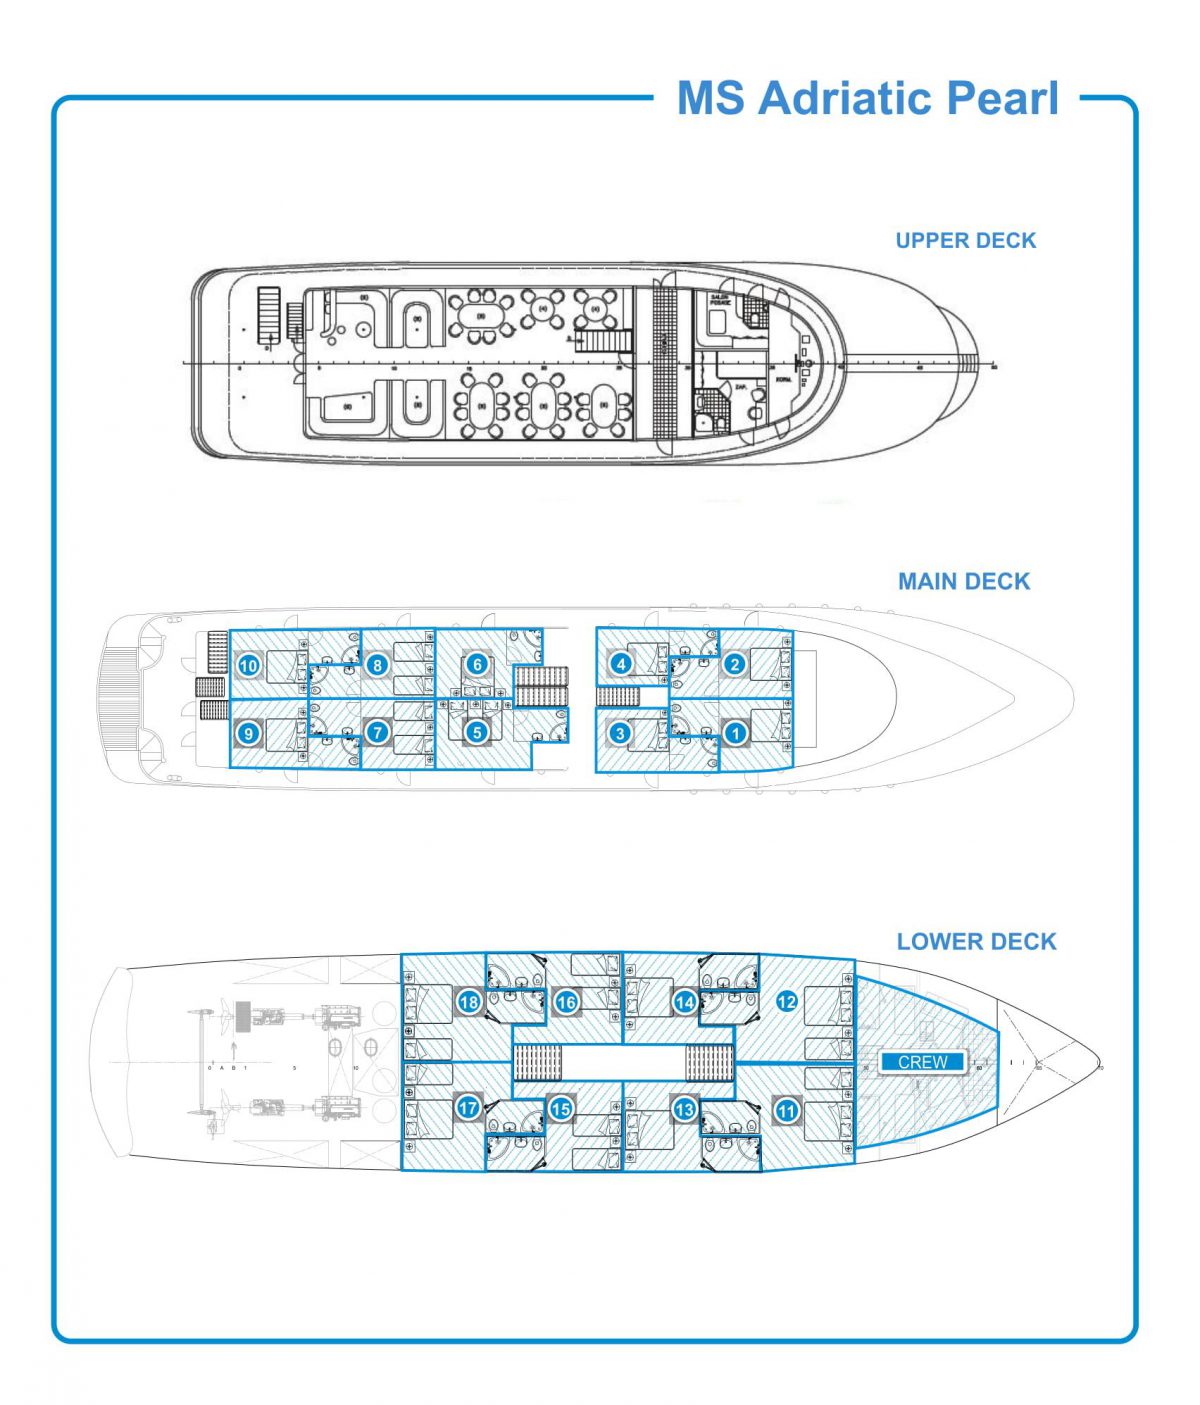 Adriatic Pearl Deck Plan